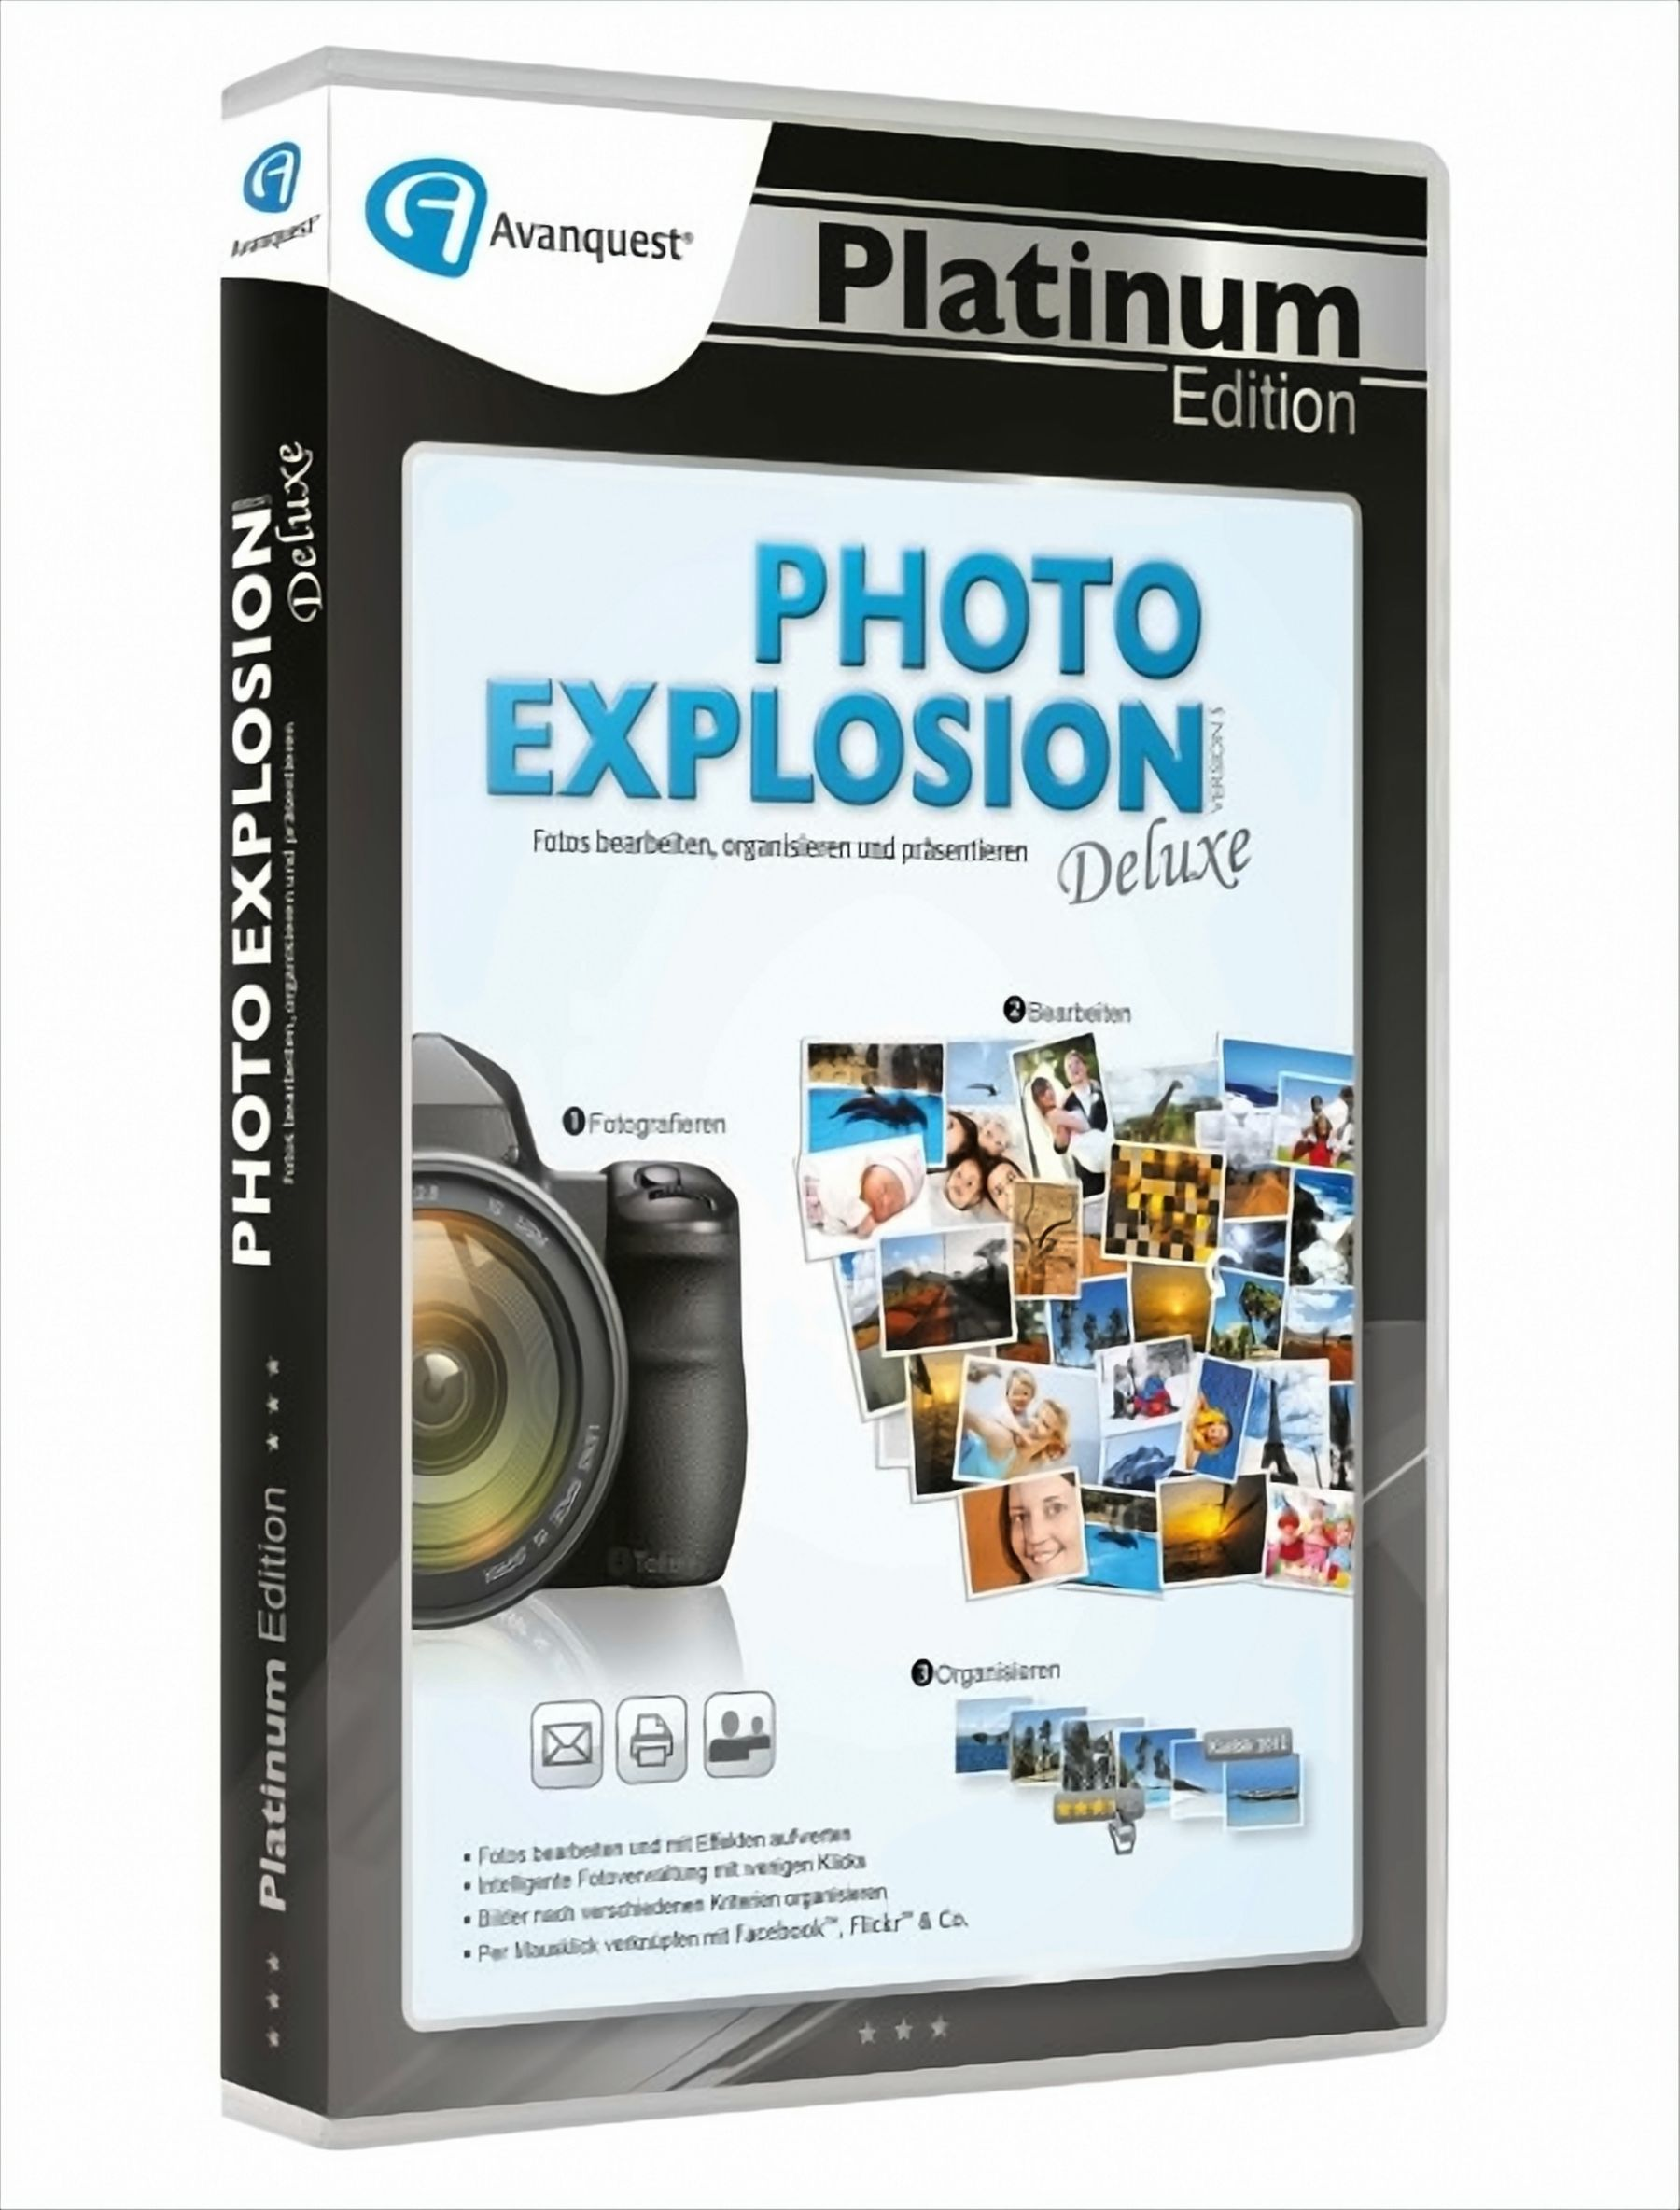 Photo Explosion 5 Deluxe Avanquest Edition Platinum - [PC